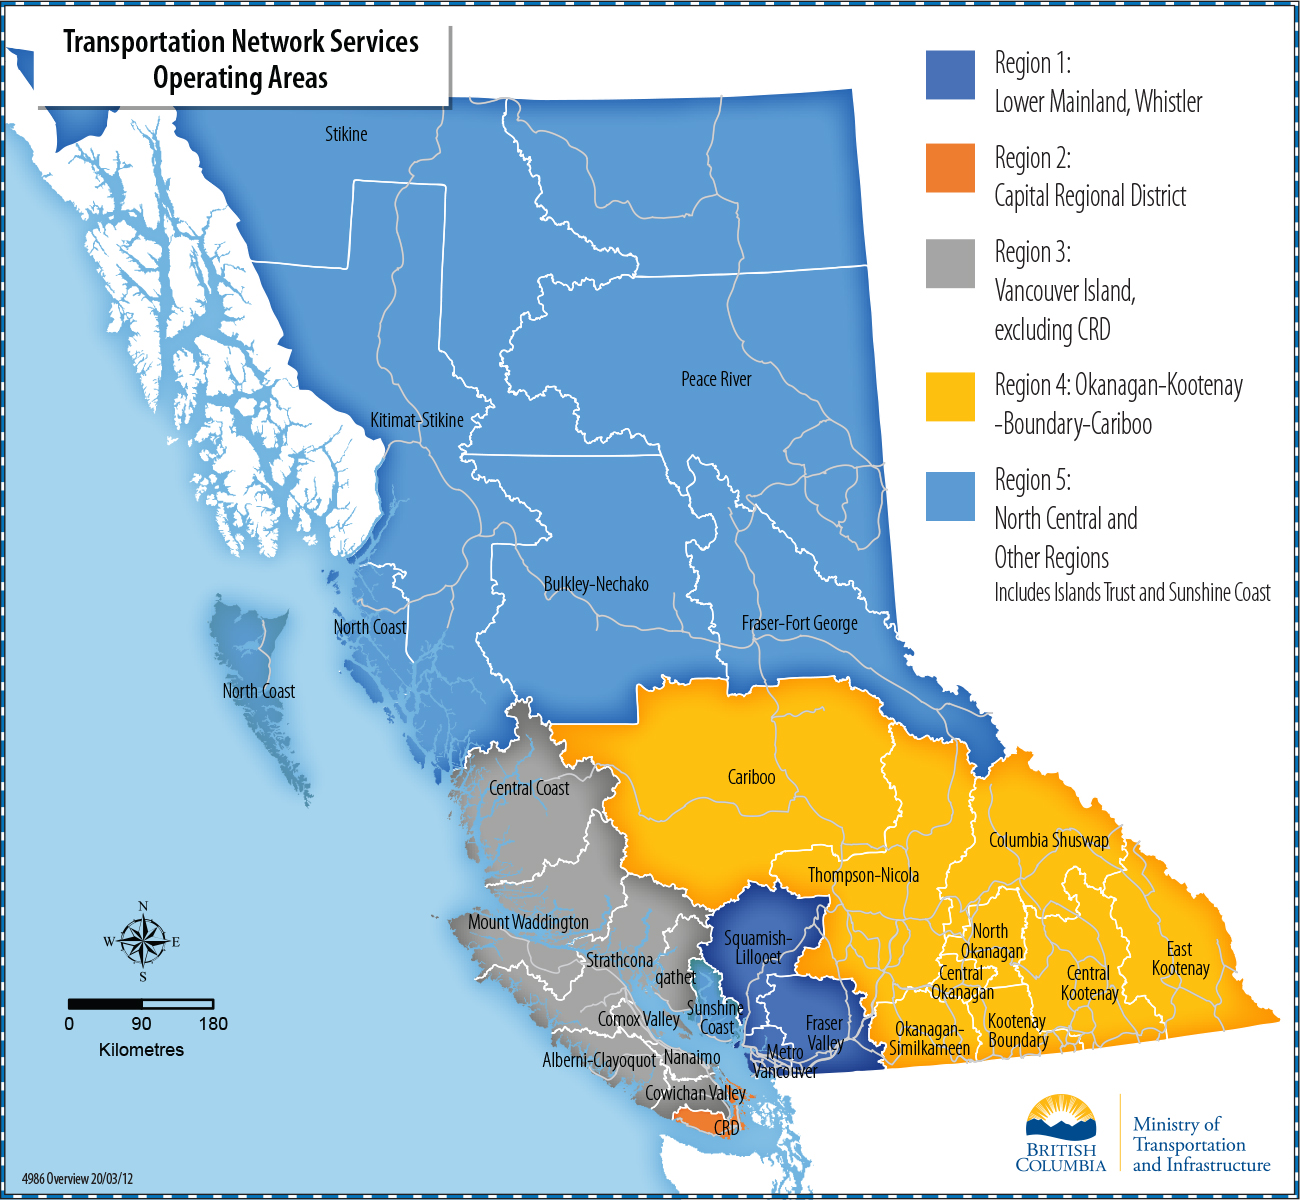 Ride hail operating regions of B.C.